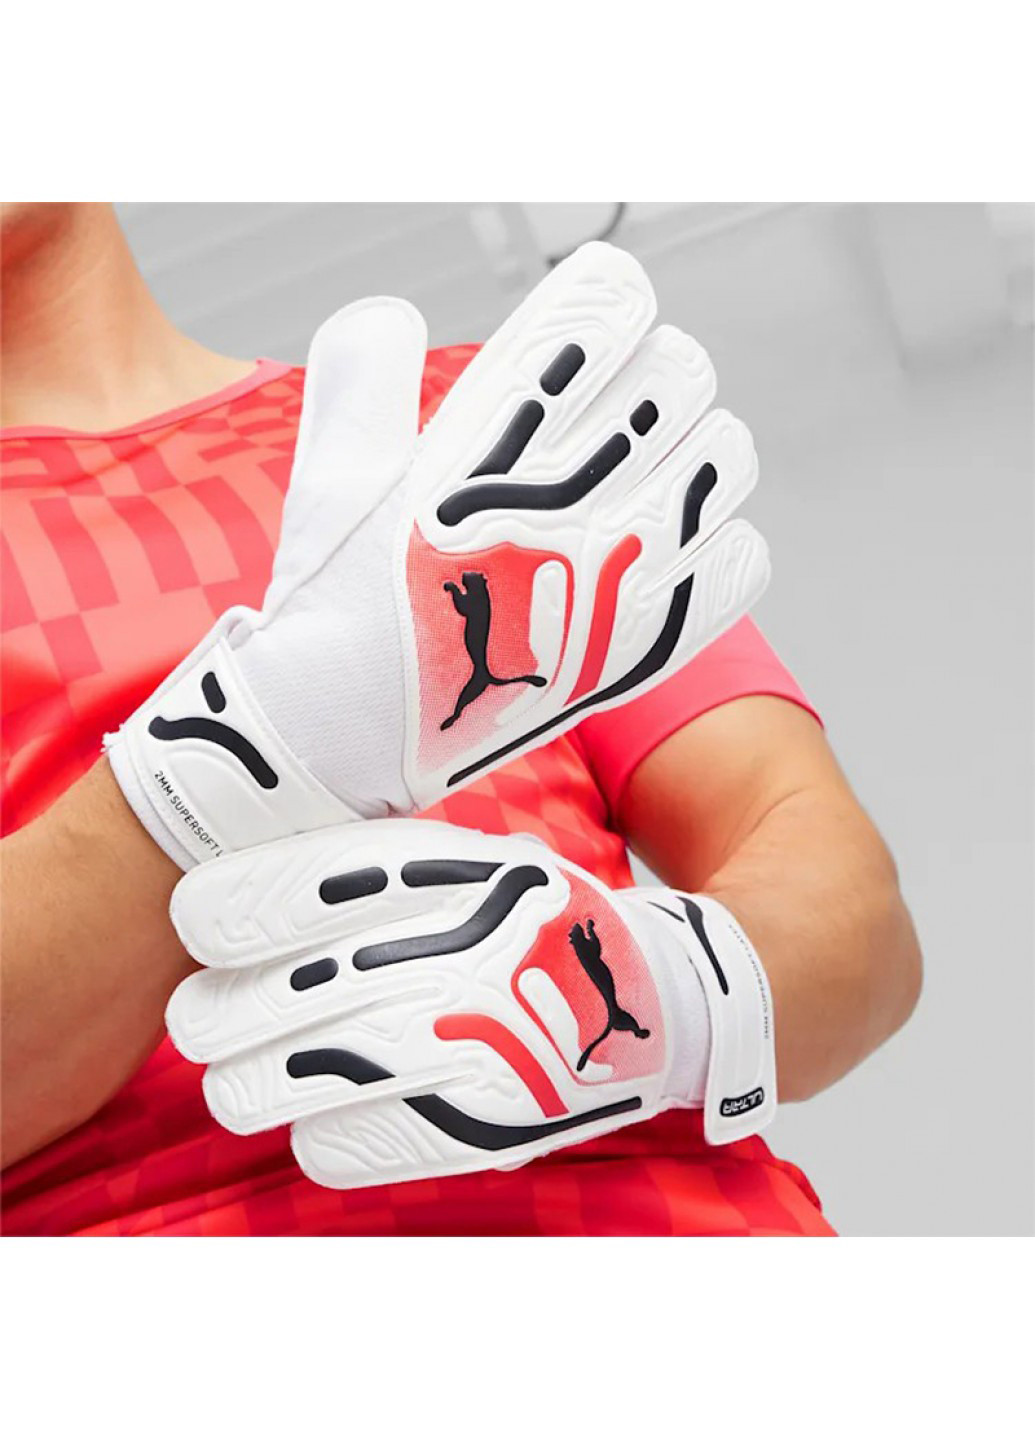 Вратарские перчатки Puma ultra play rc (265216244)